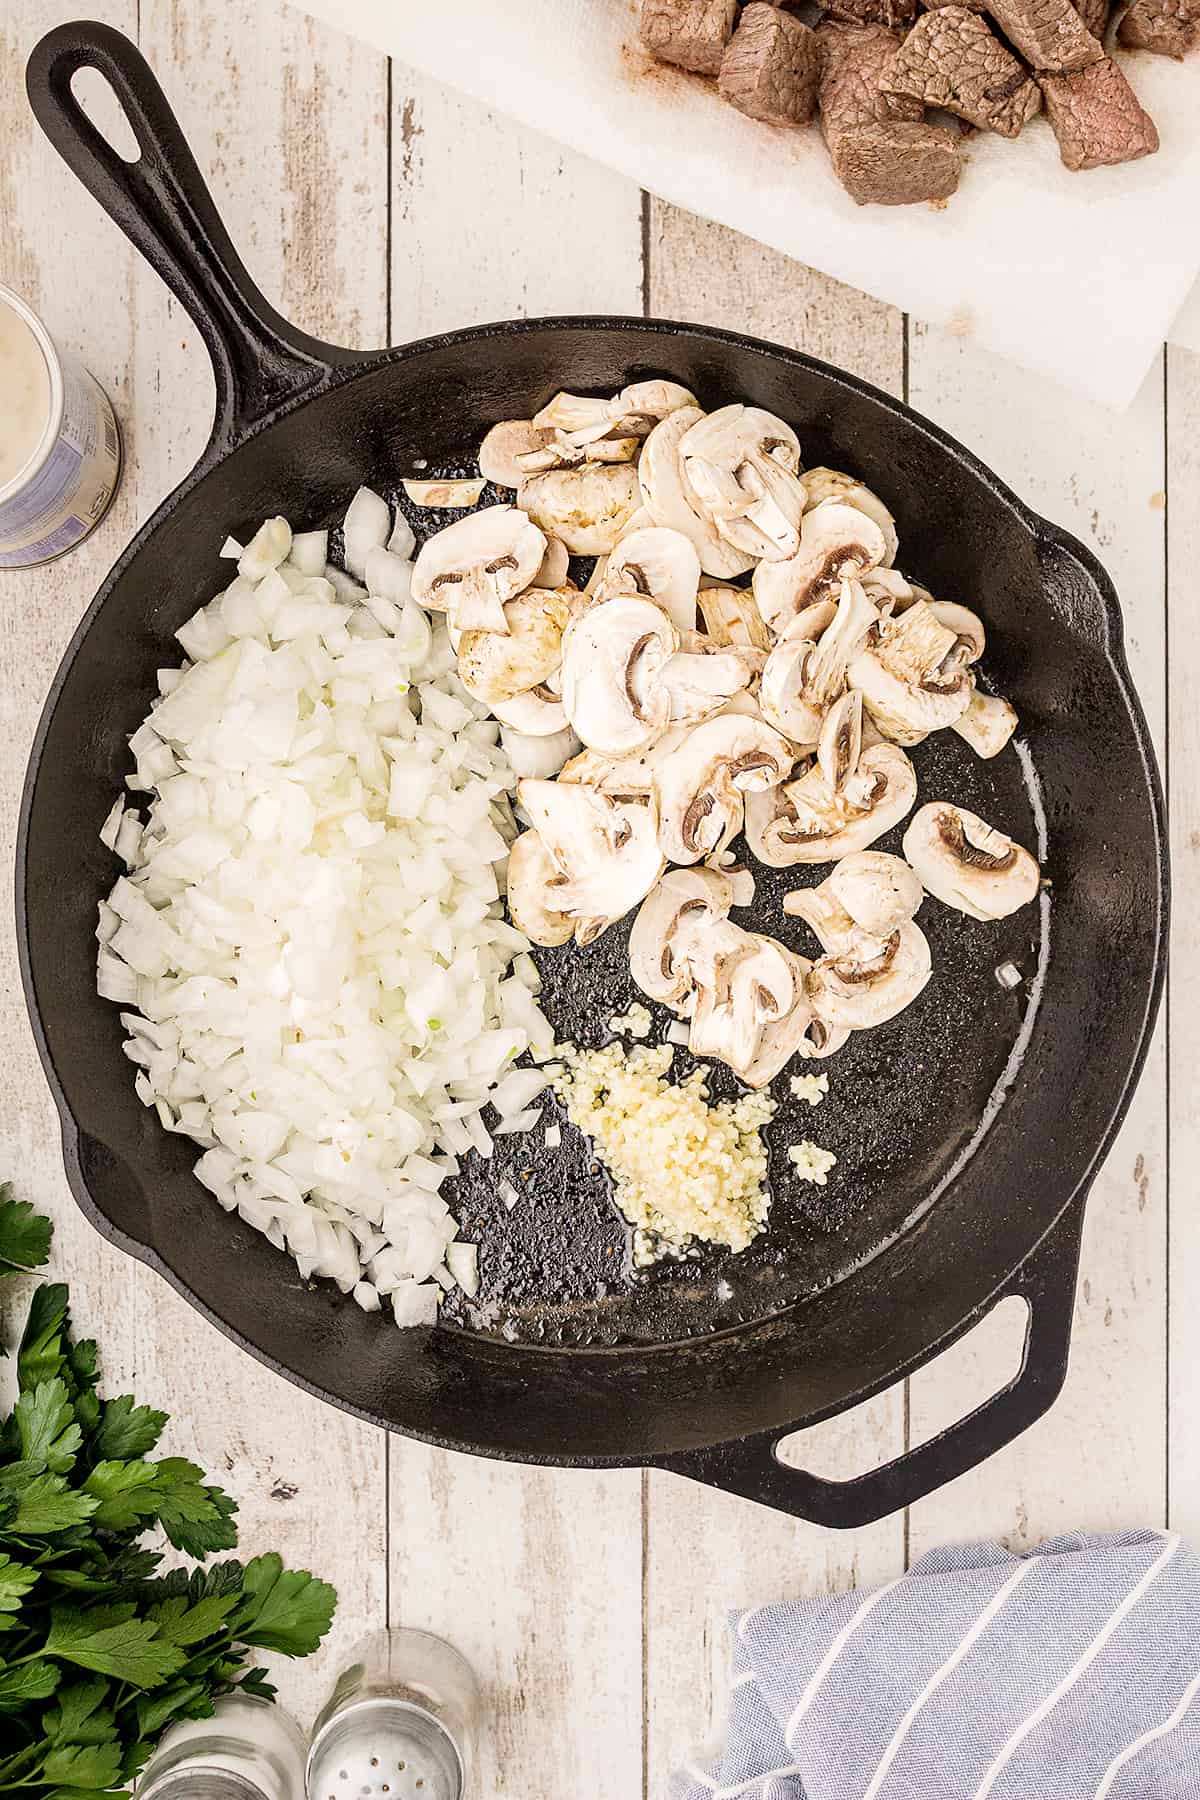 Onions, mushrooms, and garlic in black cast iron skillet.